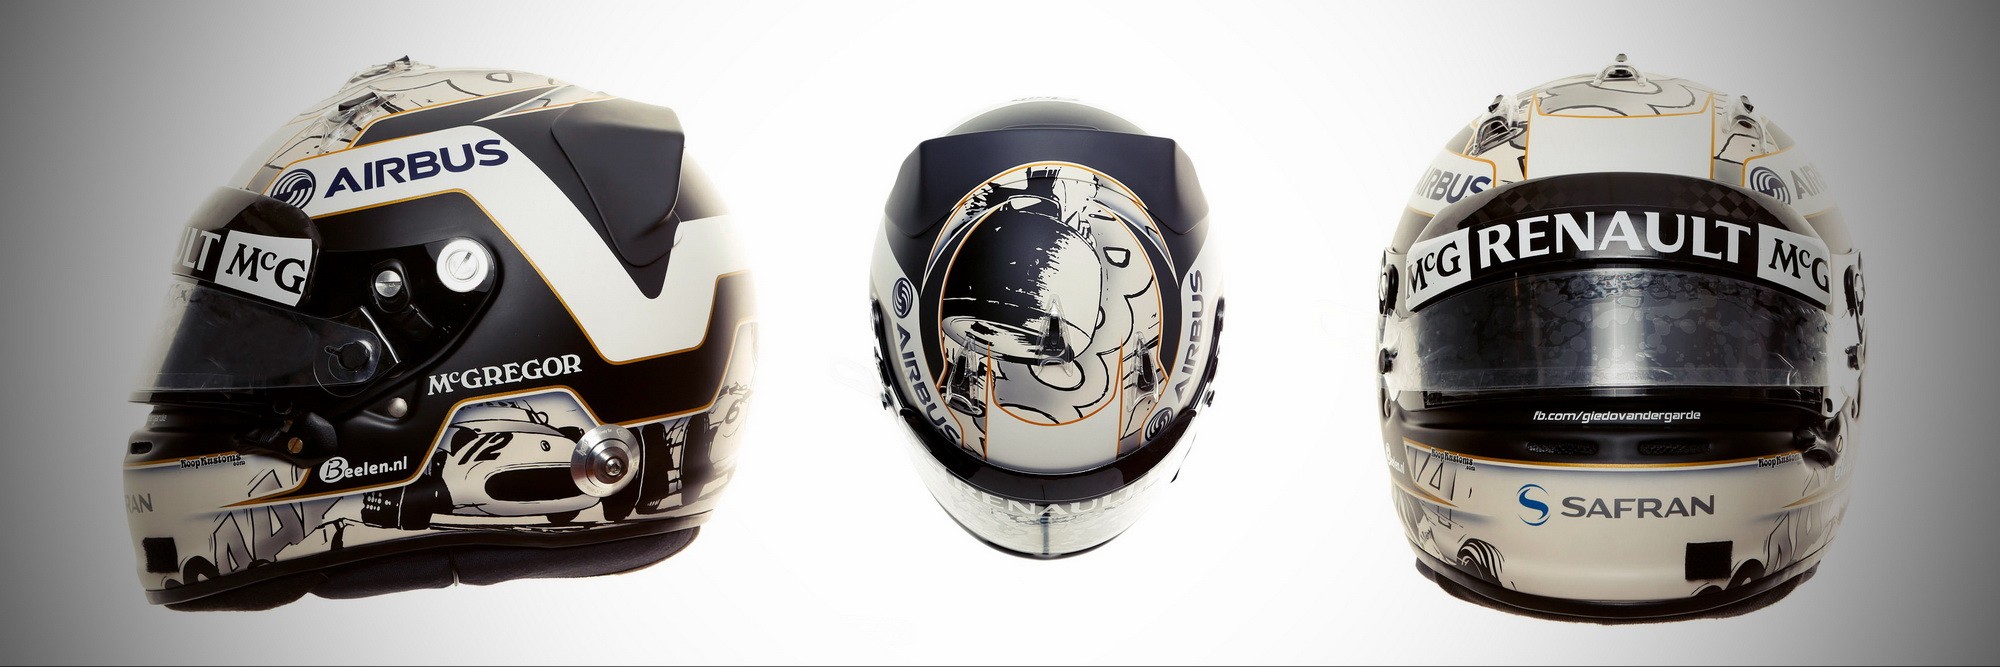 Шлем Гидо ван дер Гарде на сезон 2013 года | 2013 helmet of Giedo van der Garde